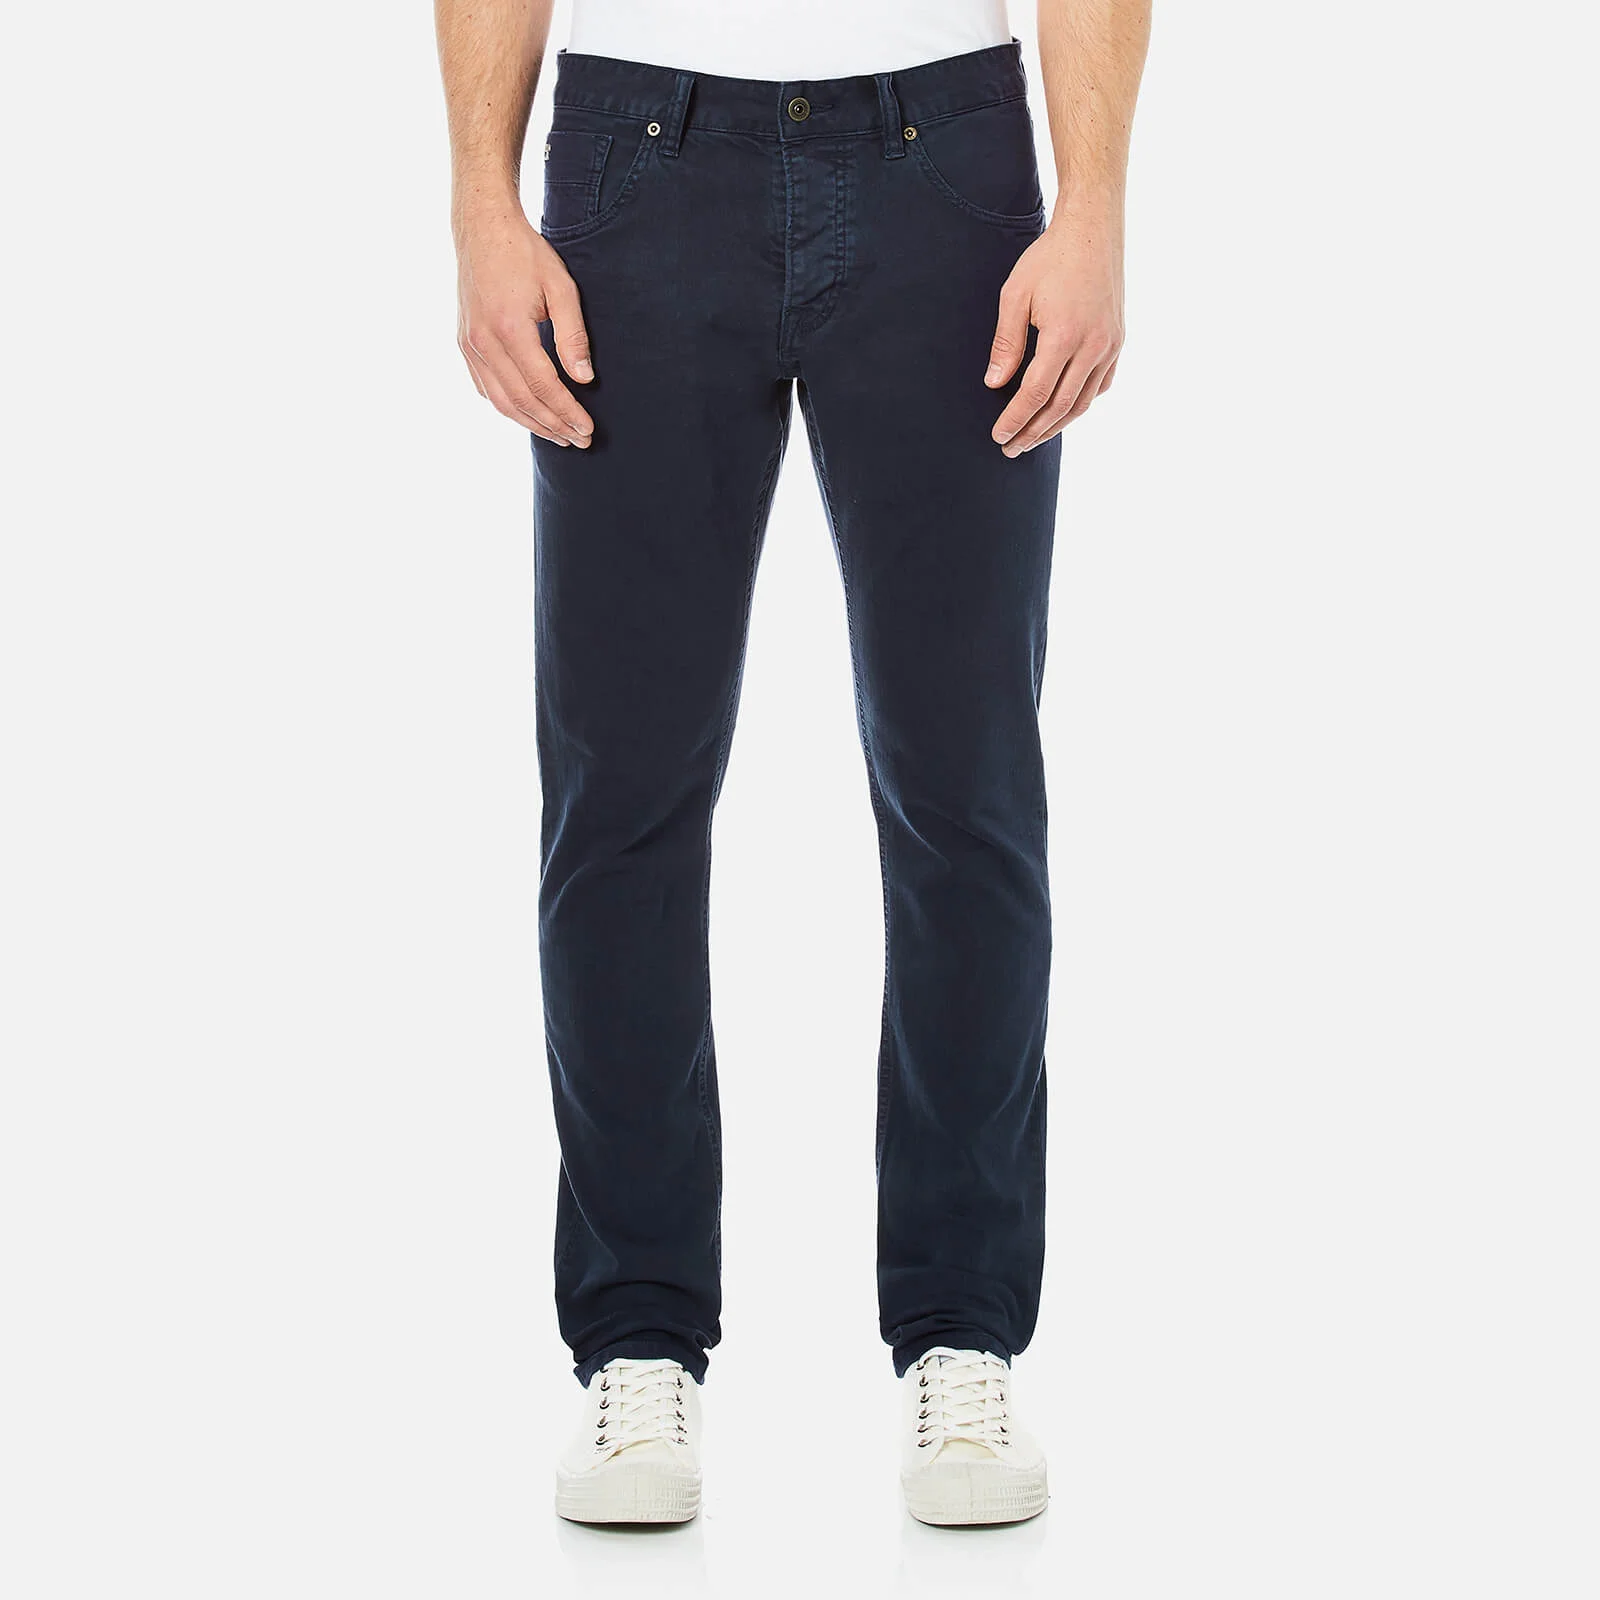 Scotch & Soda Men's Ralston Slim Fit Garment Dyed Jeans - Navy Image 1